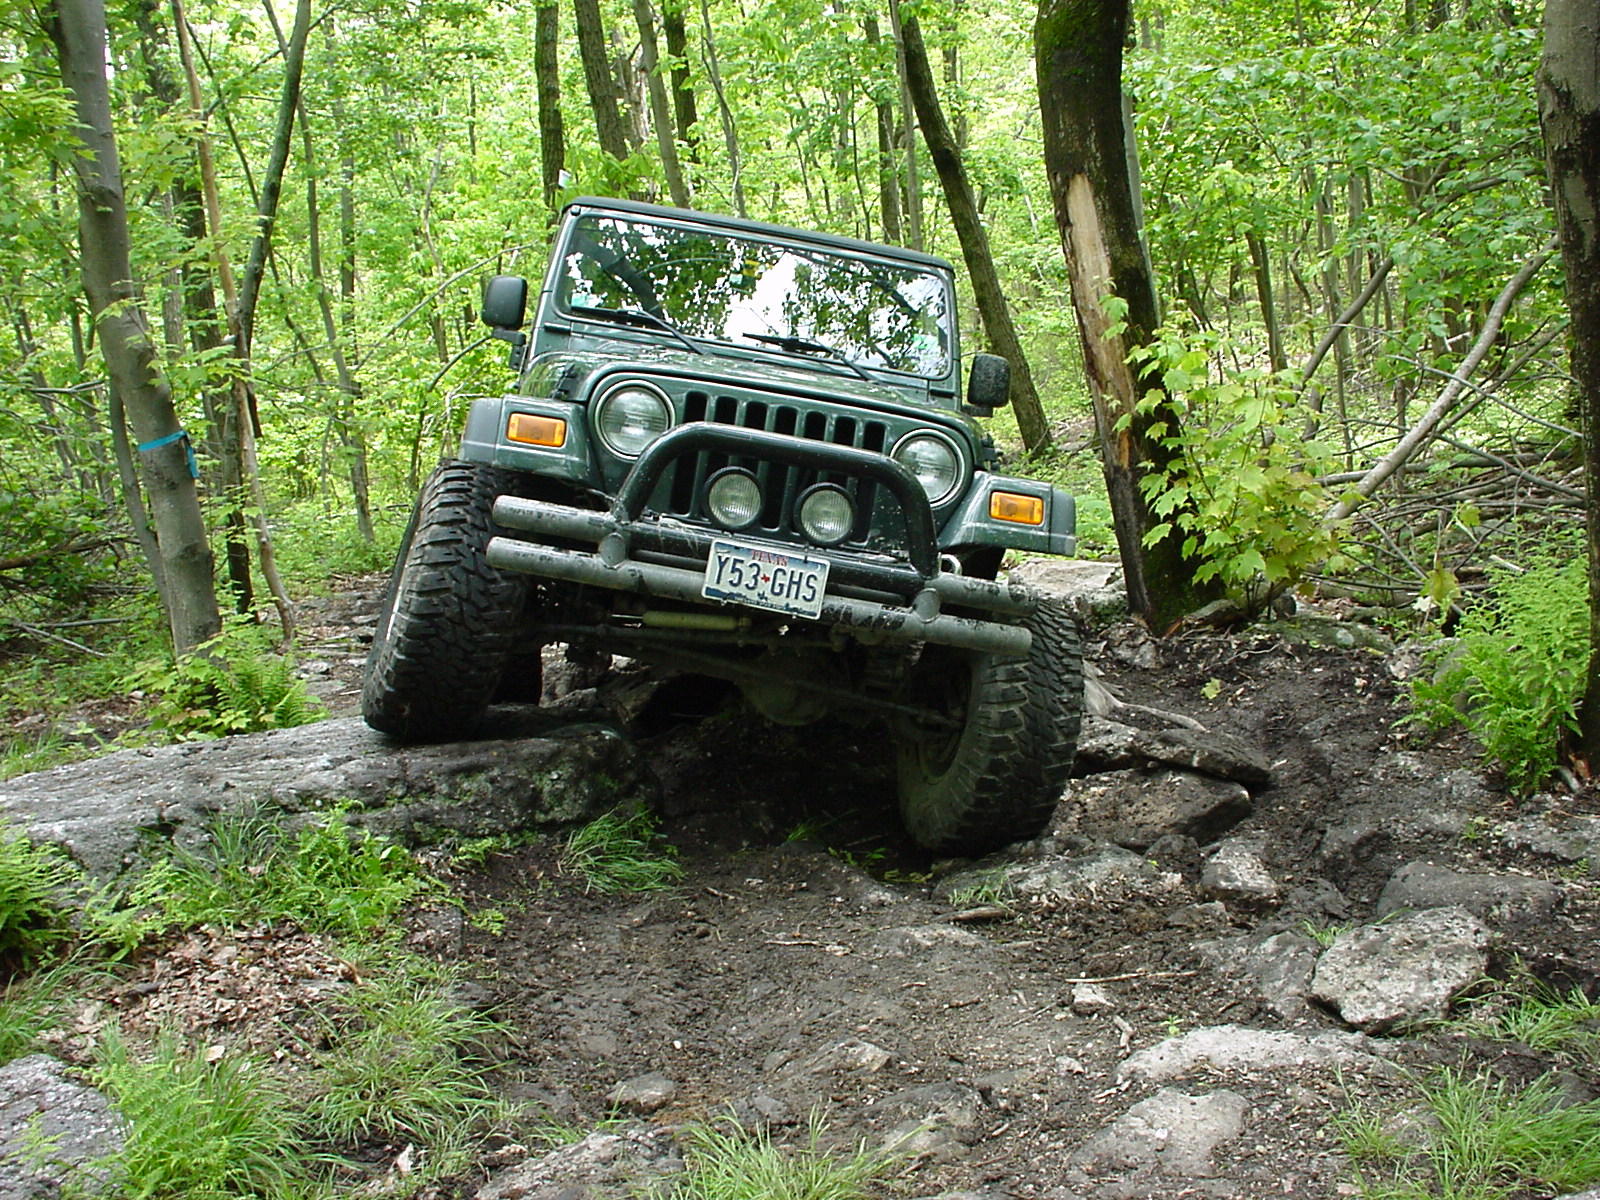 Jeeps on rocks in Pennsylvania
Keywords: Jeep on Rocks